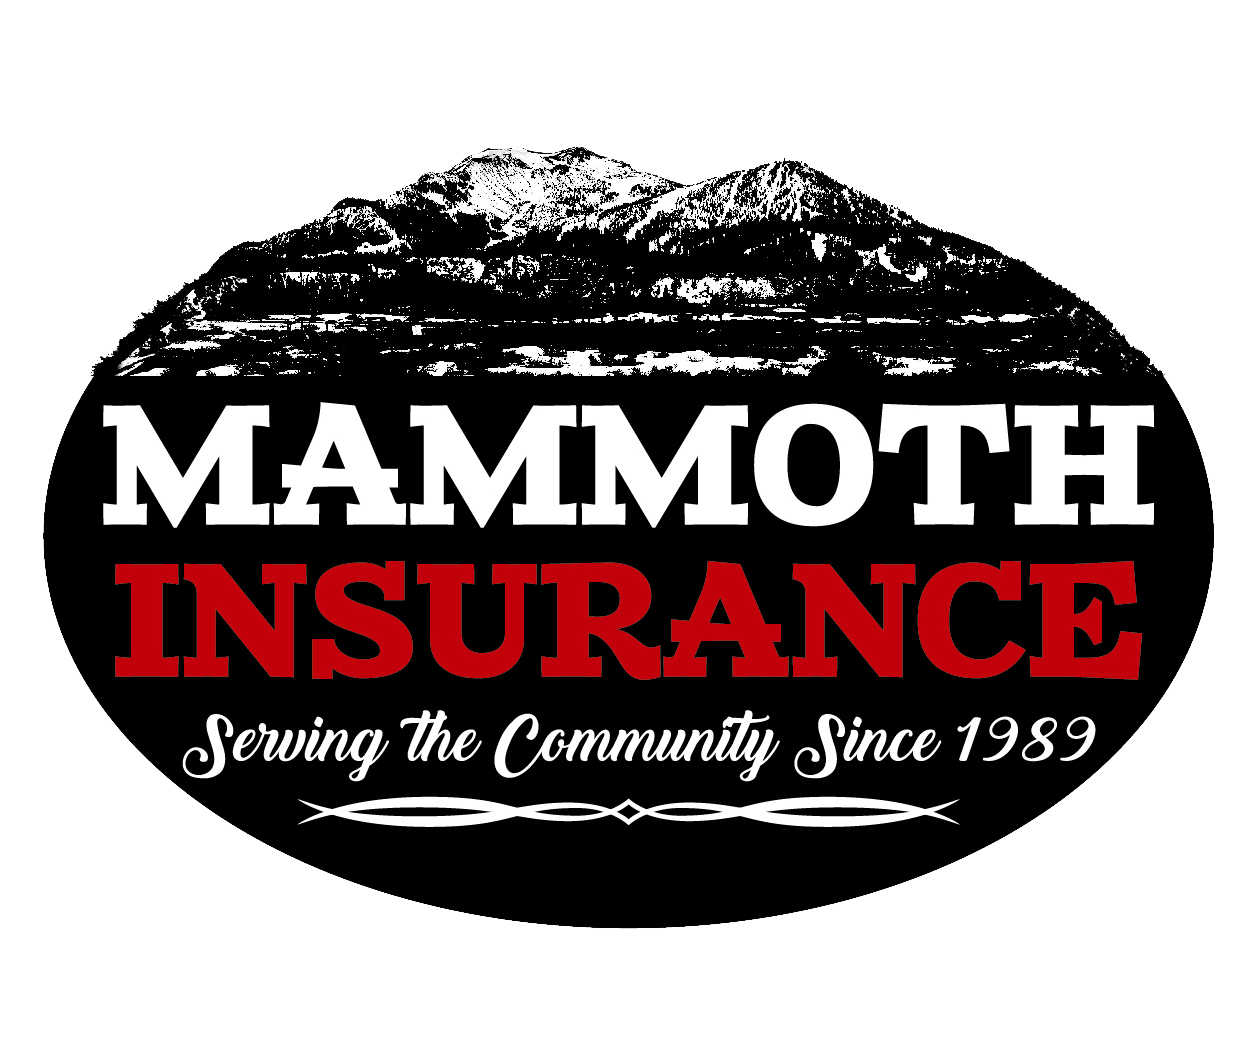 Mammoth Insurance